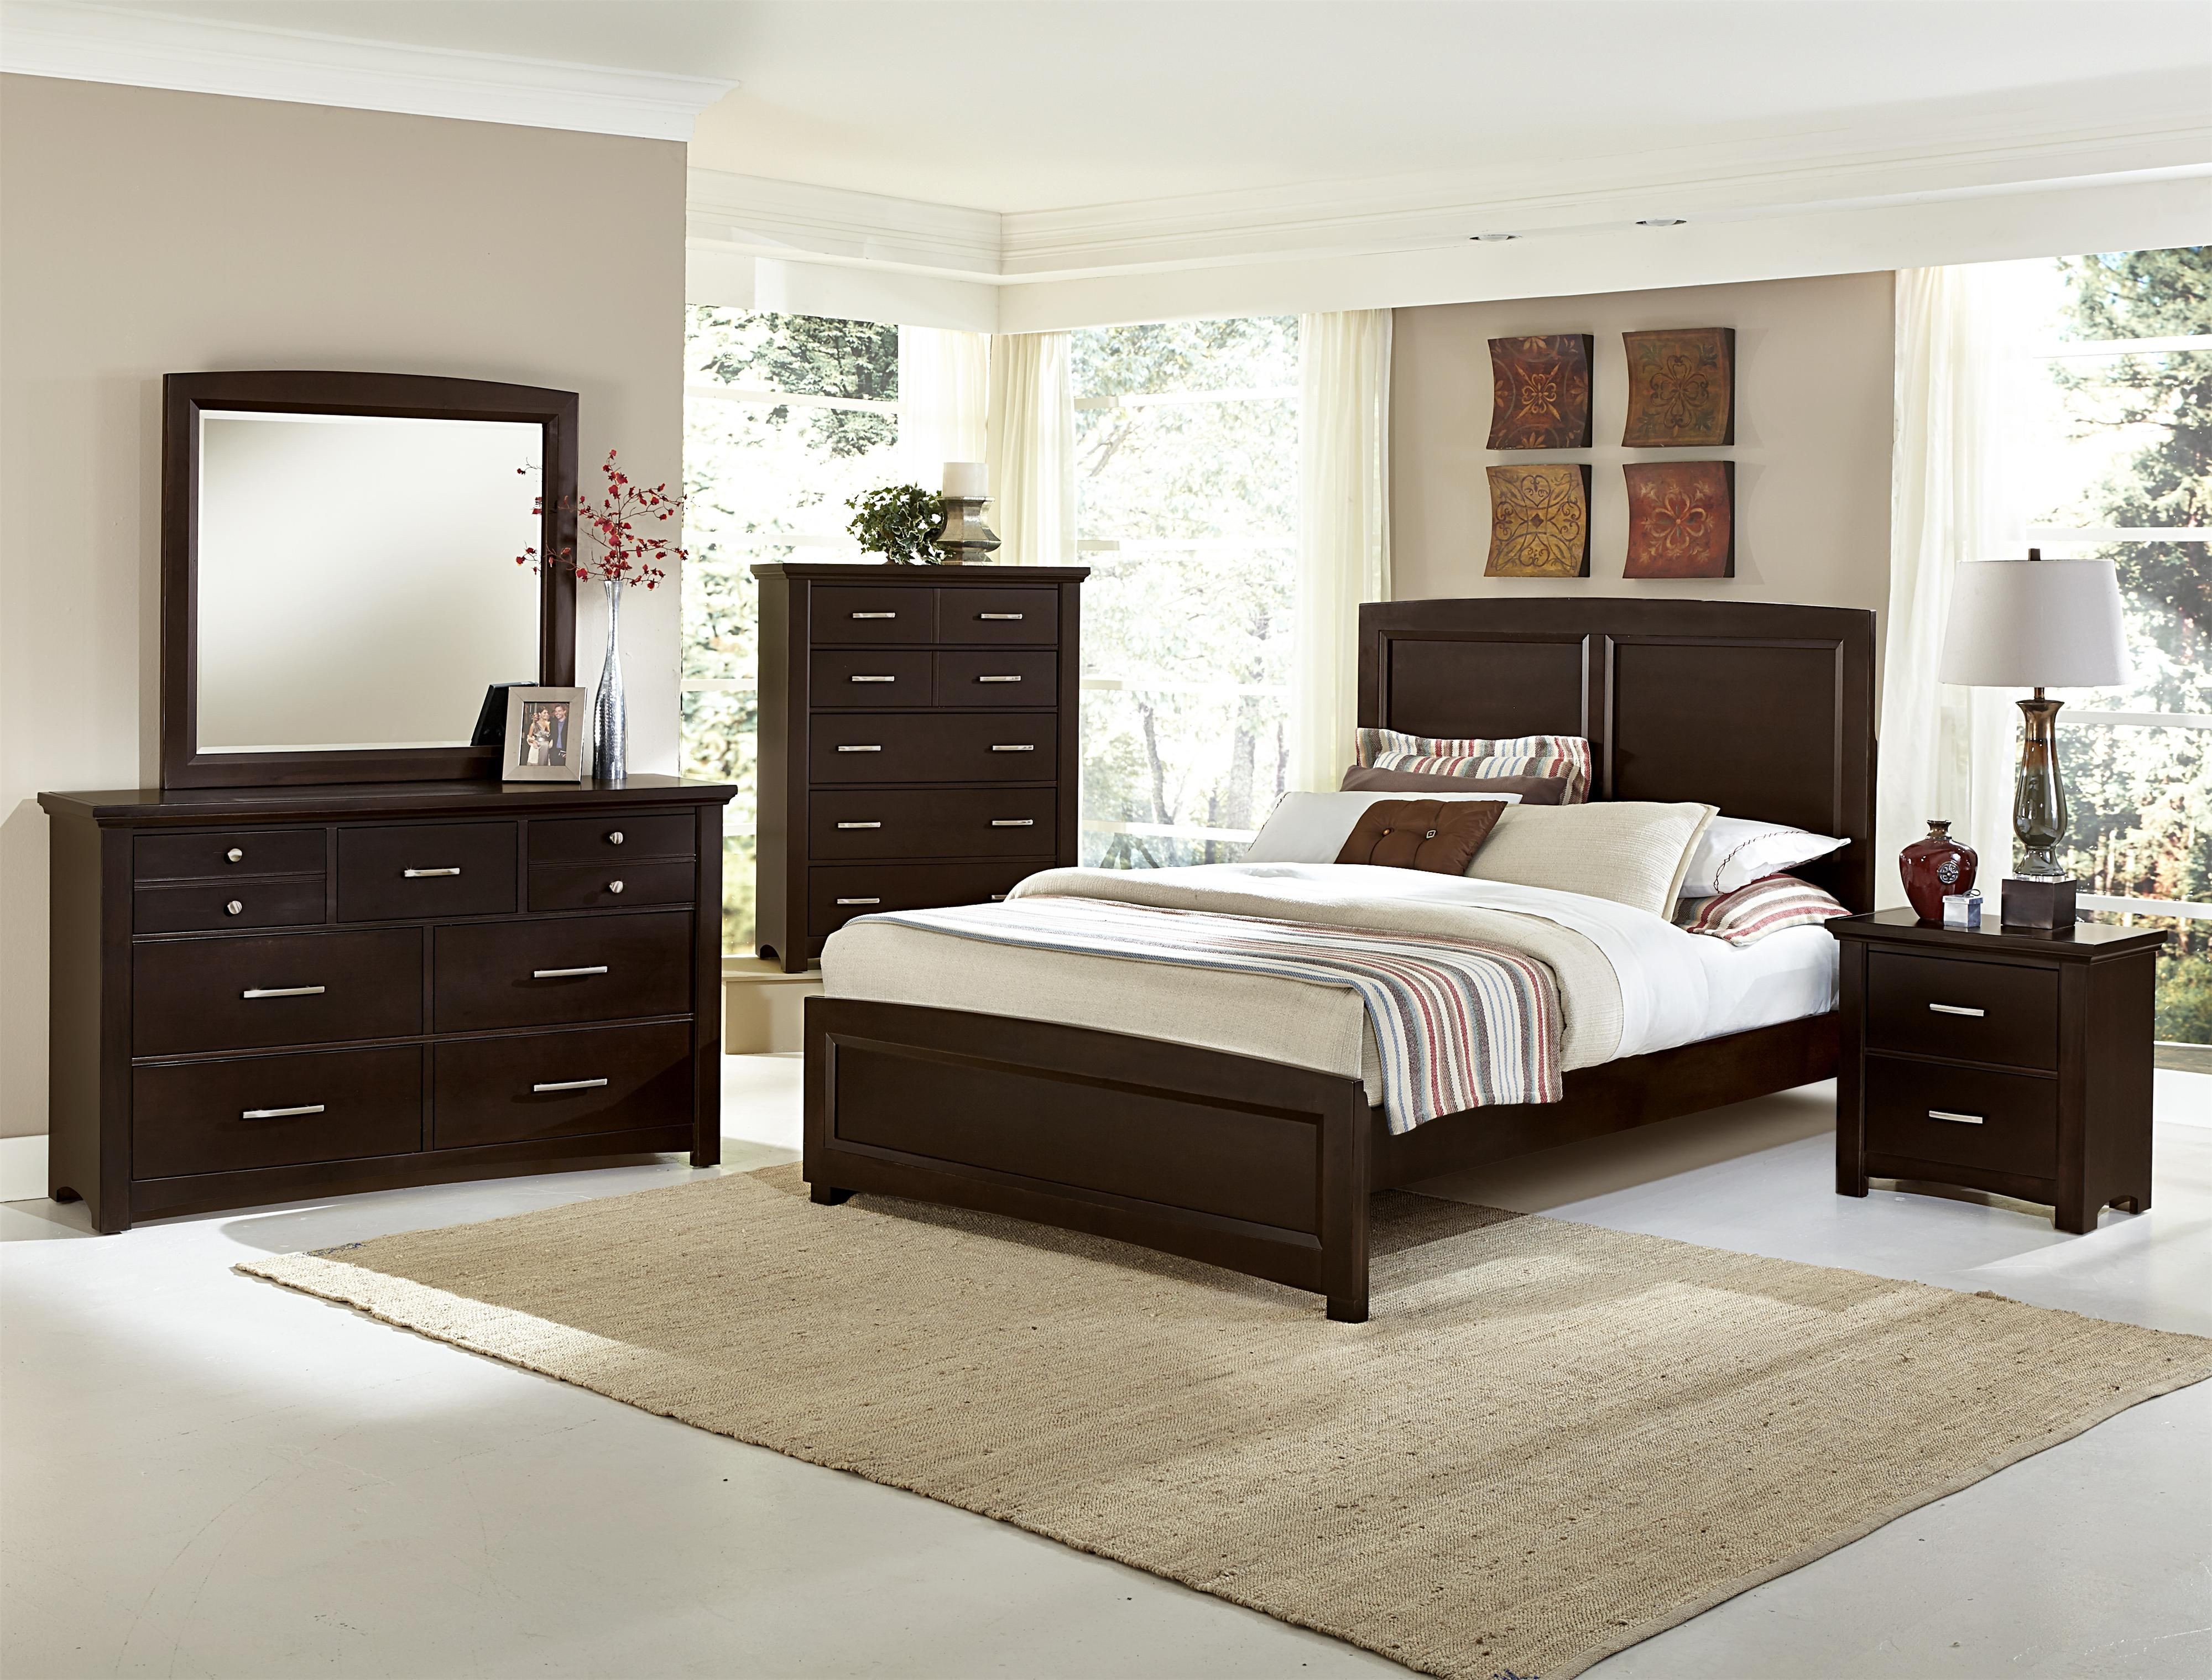 bassett bedroom furniture giveaway